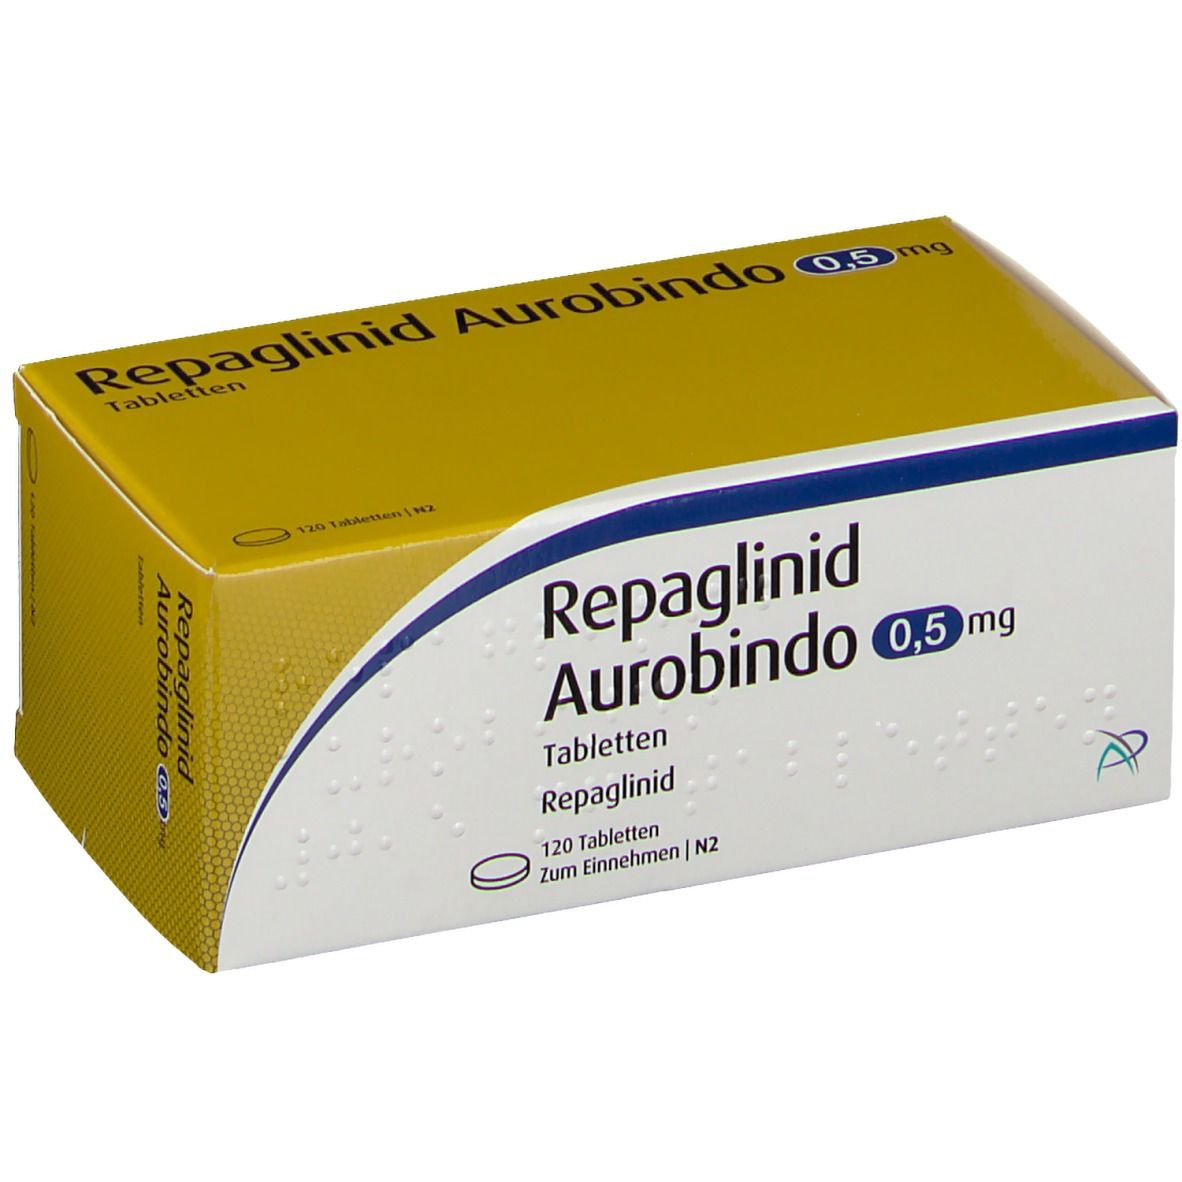 REPAGLINID Aurobindo 0,5 mg Tabletten